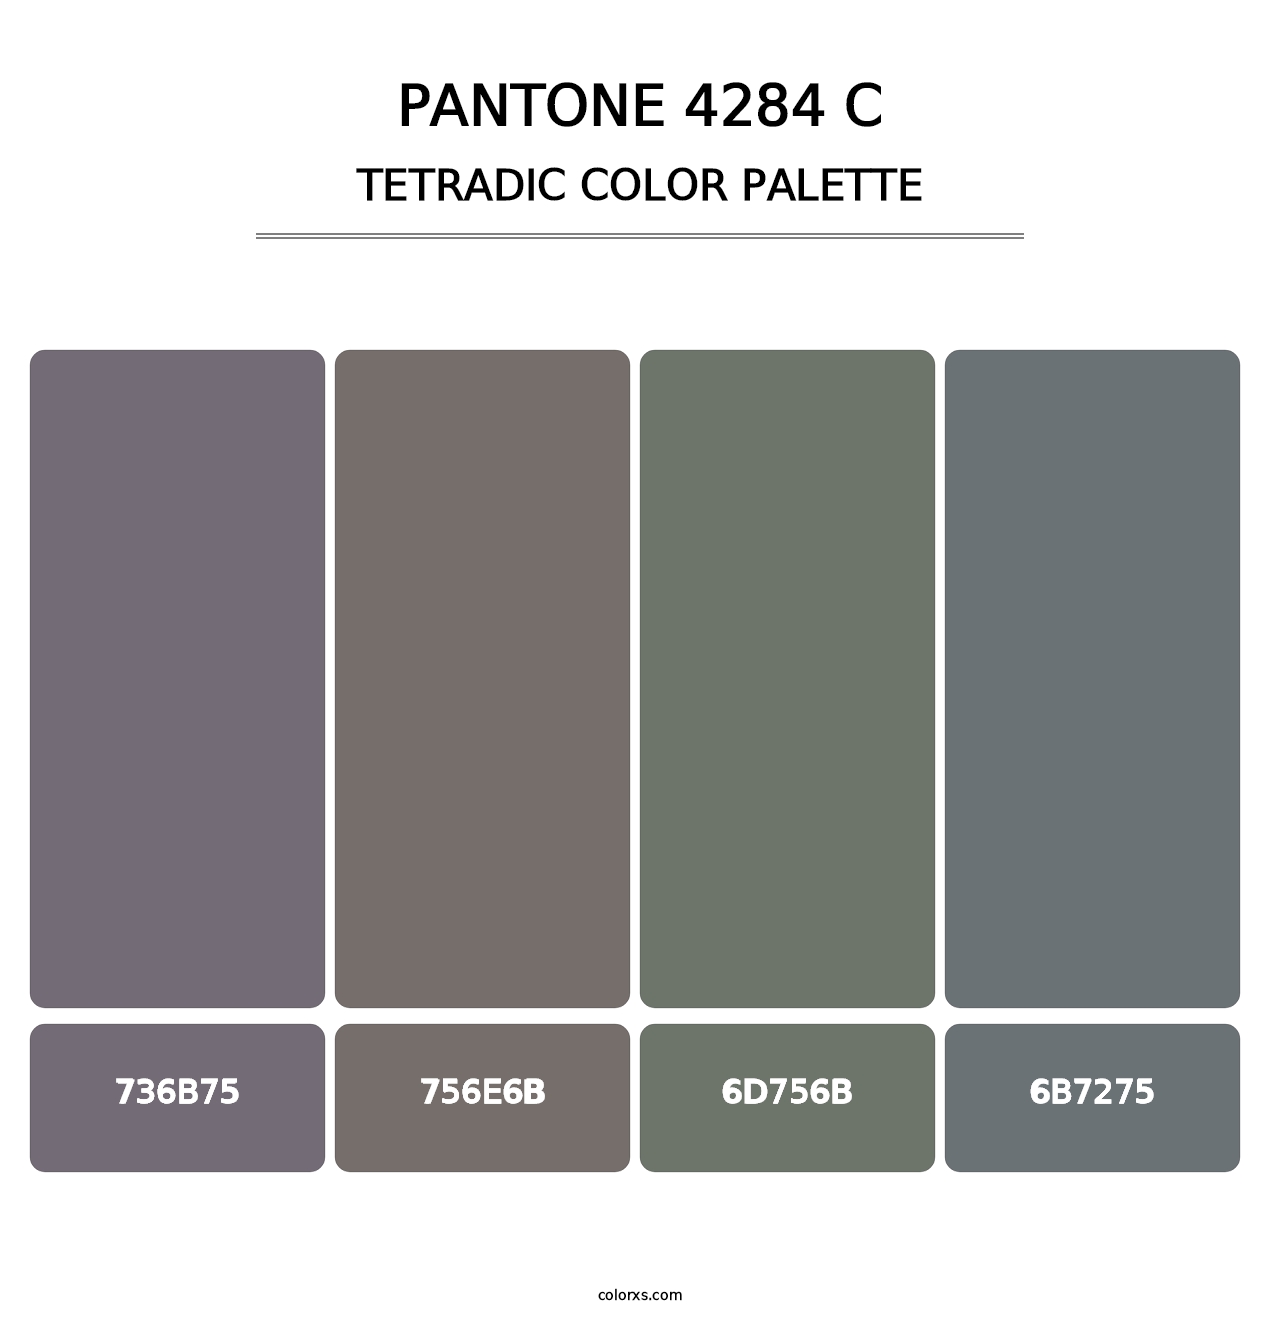 PANTONE 4284 C - Tetradic Color Palette